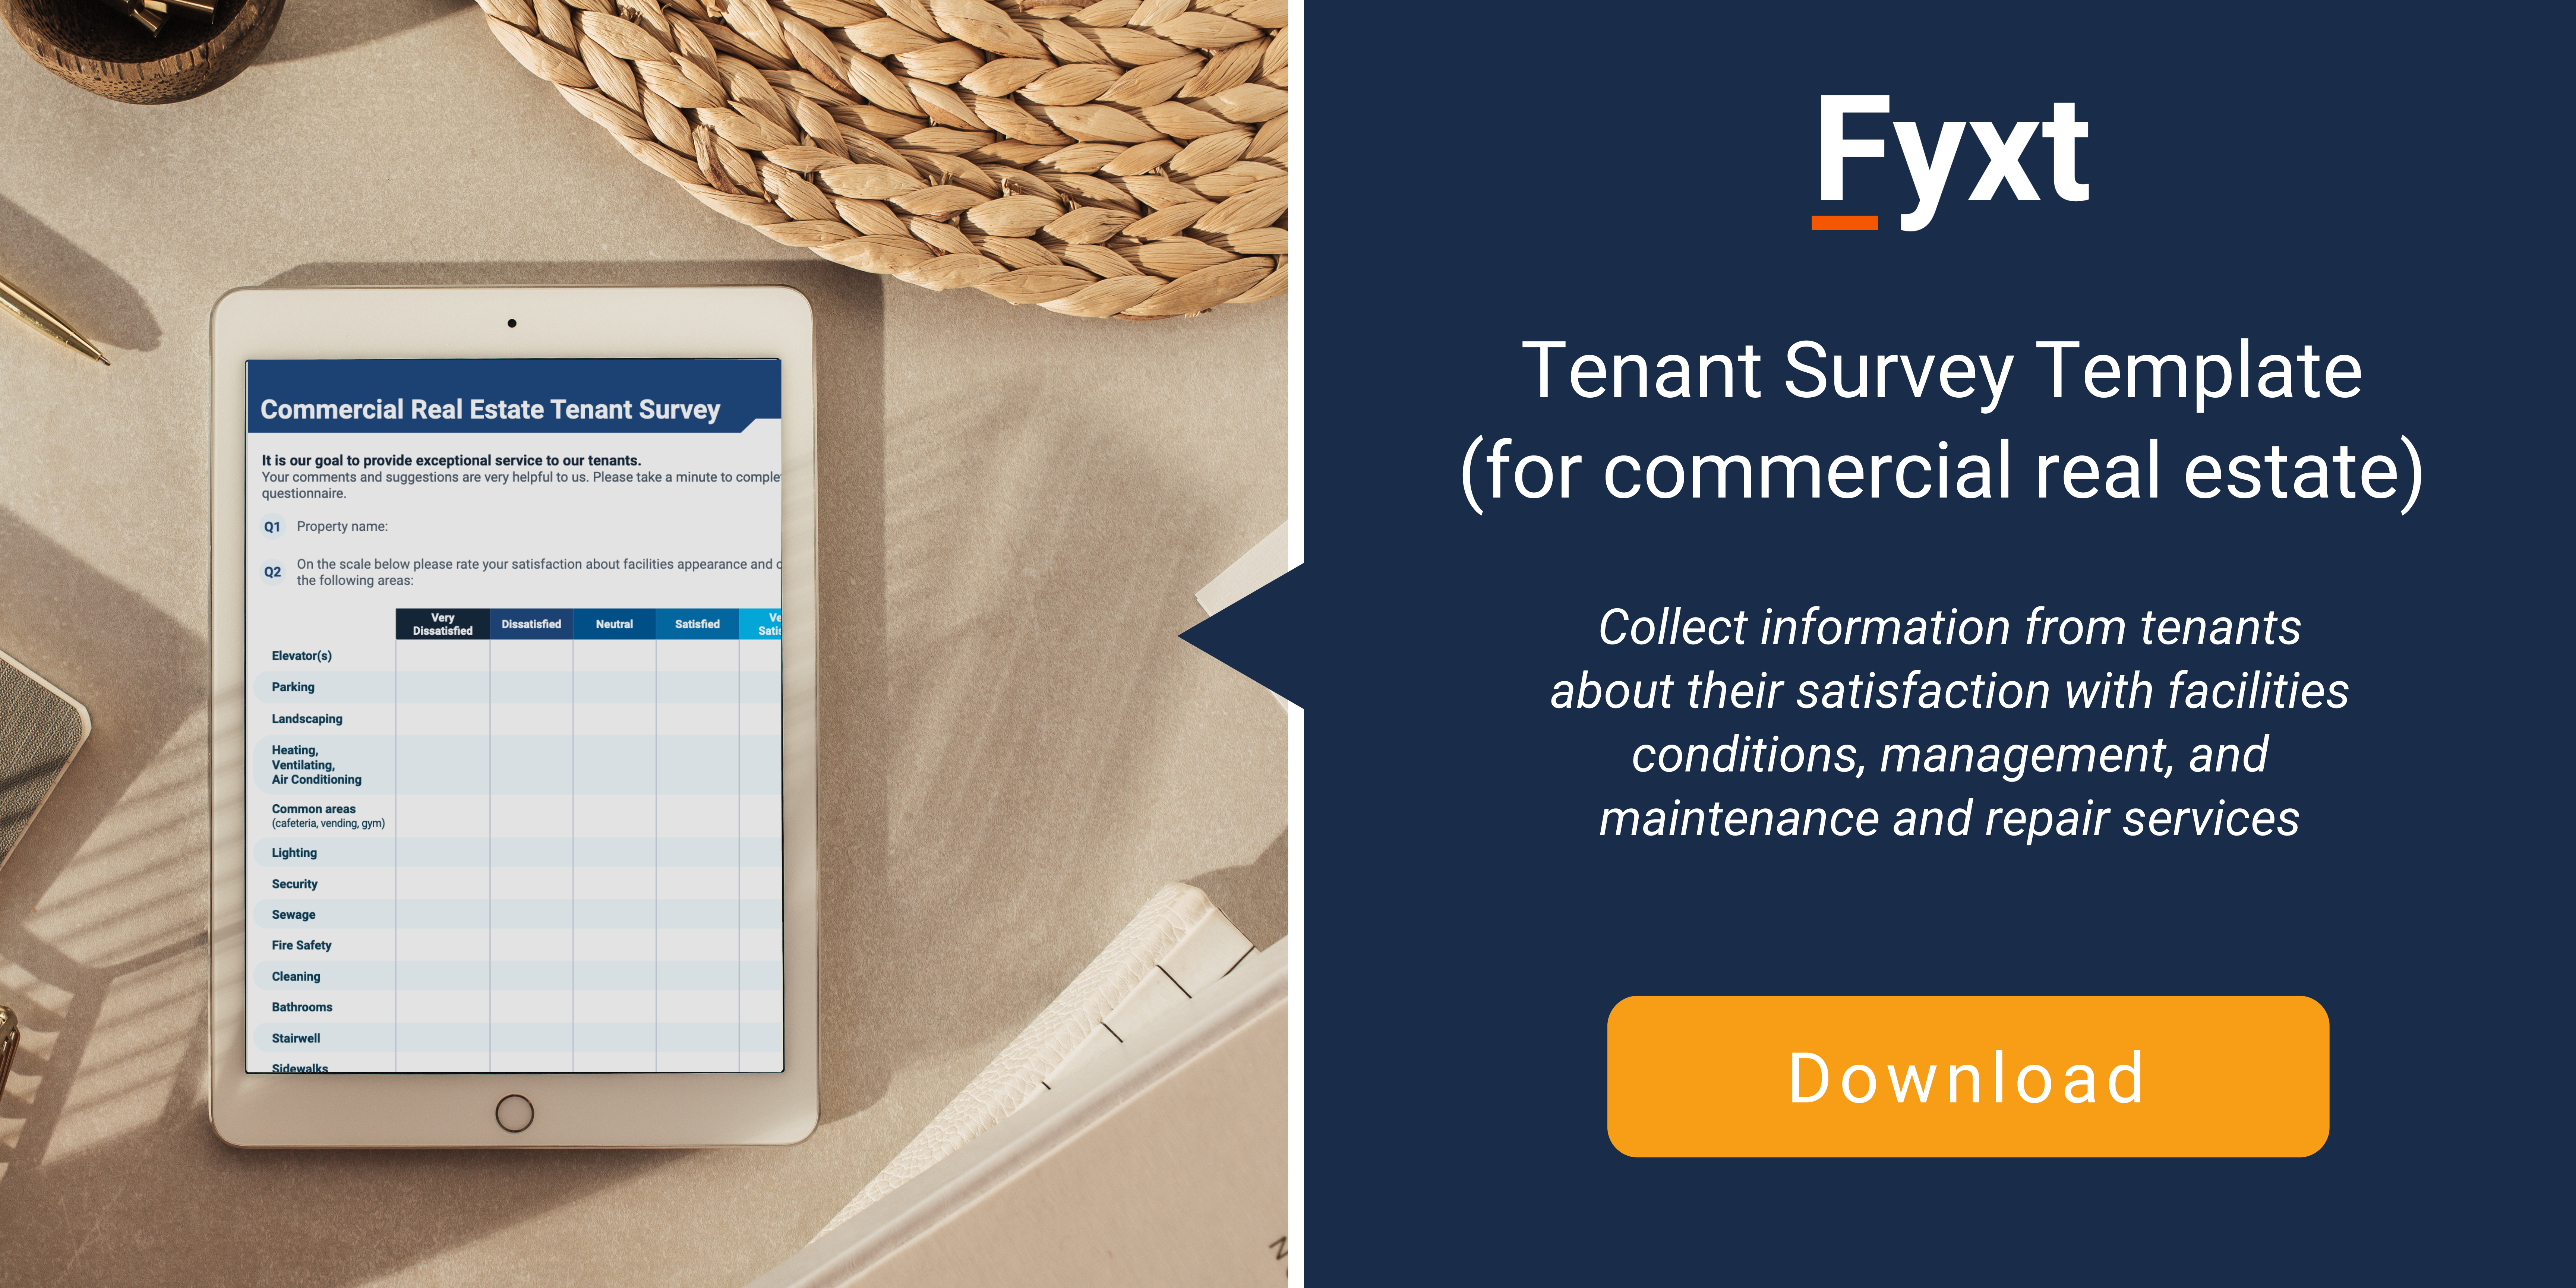 Commercial Real Estate Tenant Survey Guide